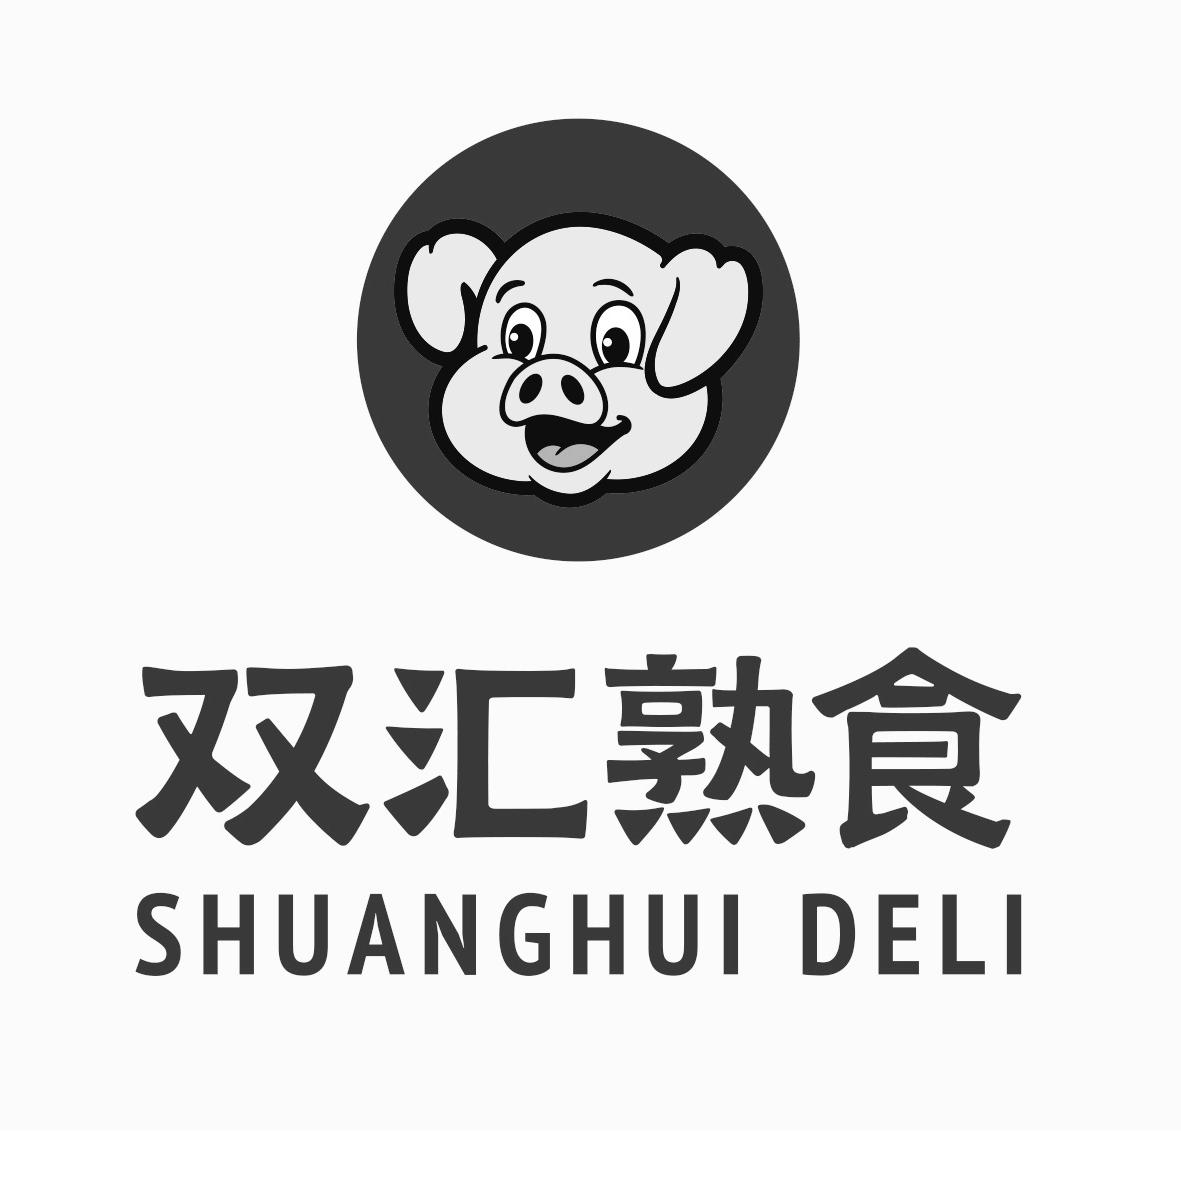 双汇熟食 shuanghui deli 商标公告